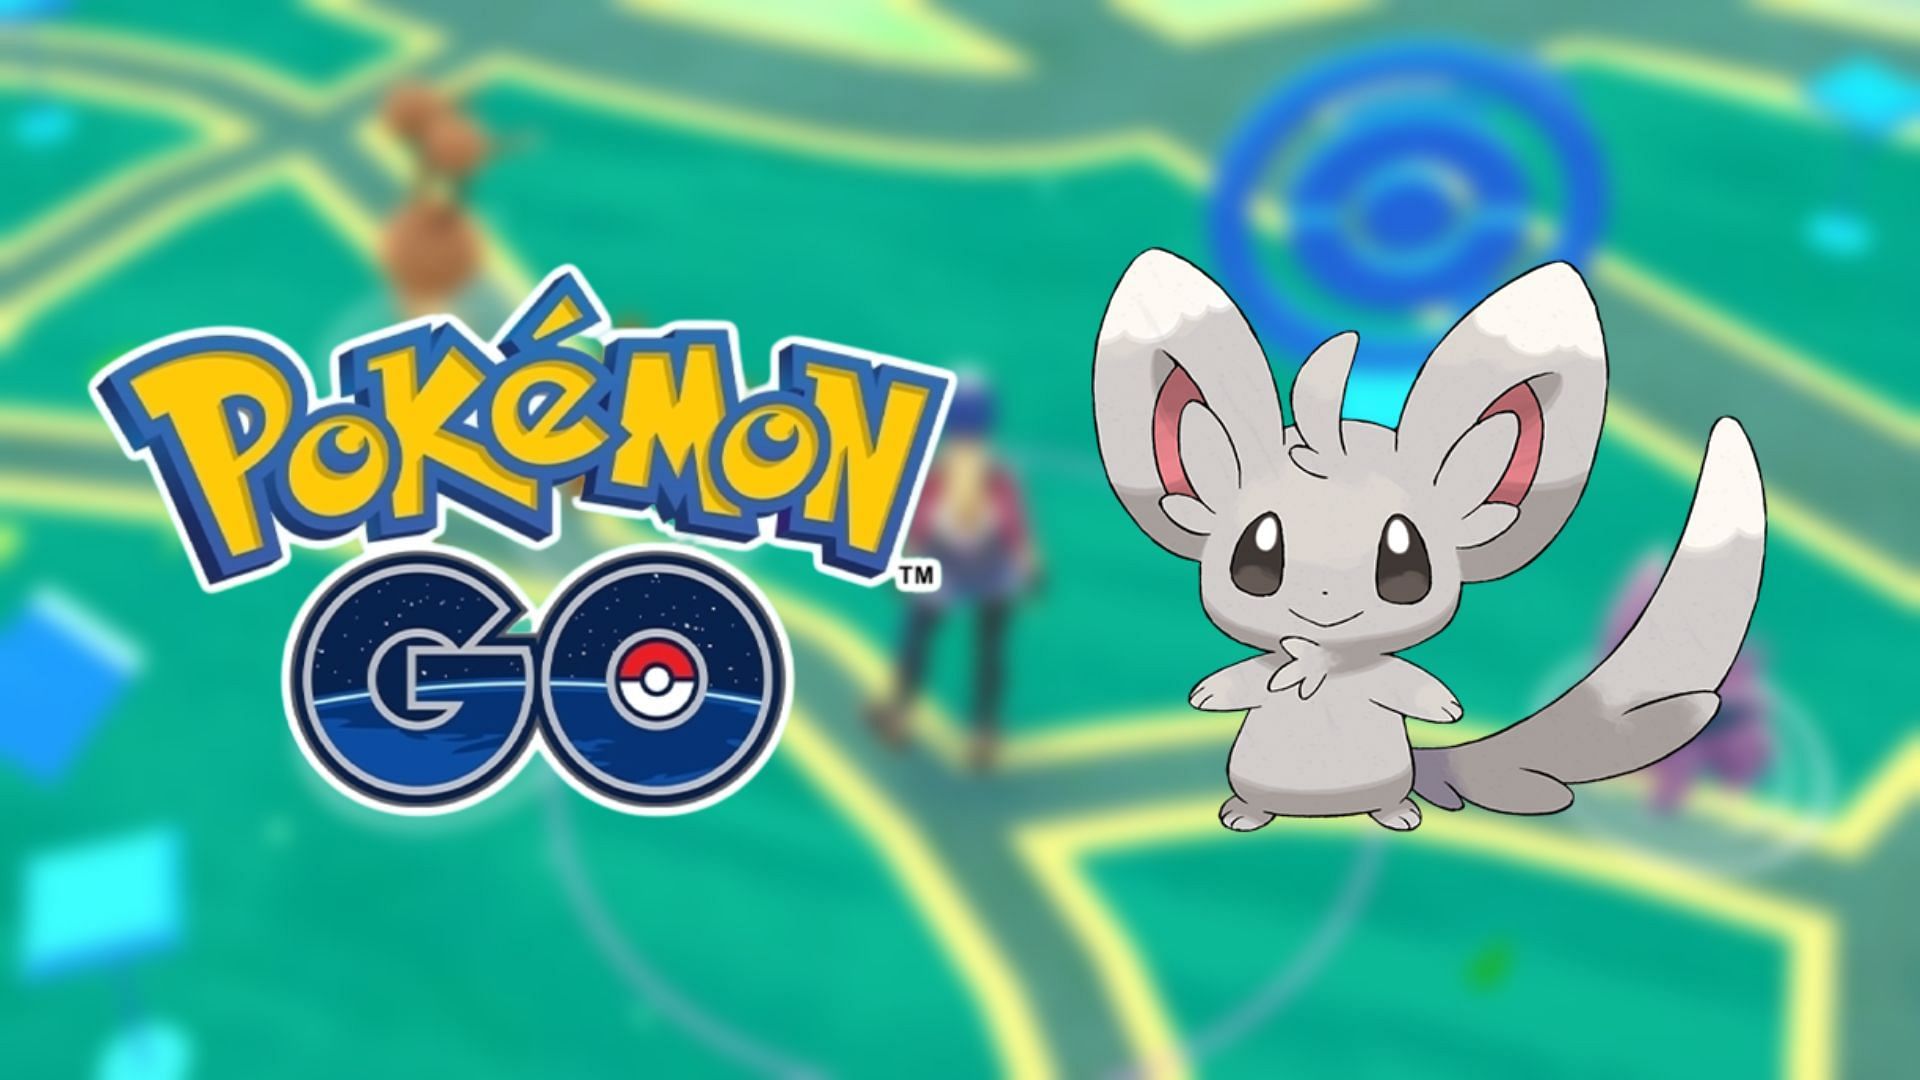 Kartana Raid Guide for Pokémon GO: Ultra Beast Global Arrival